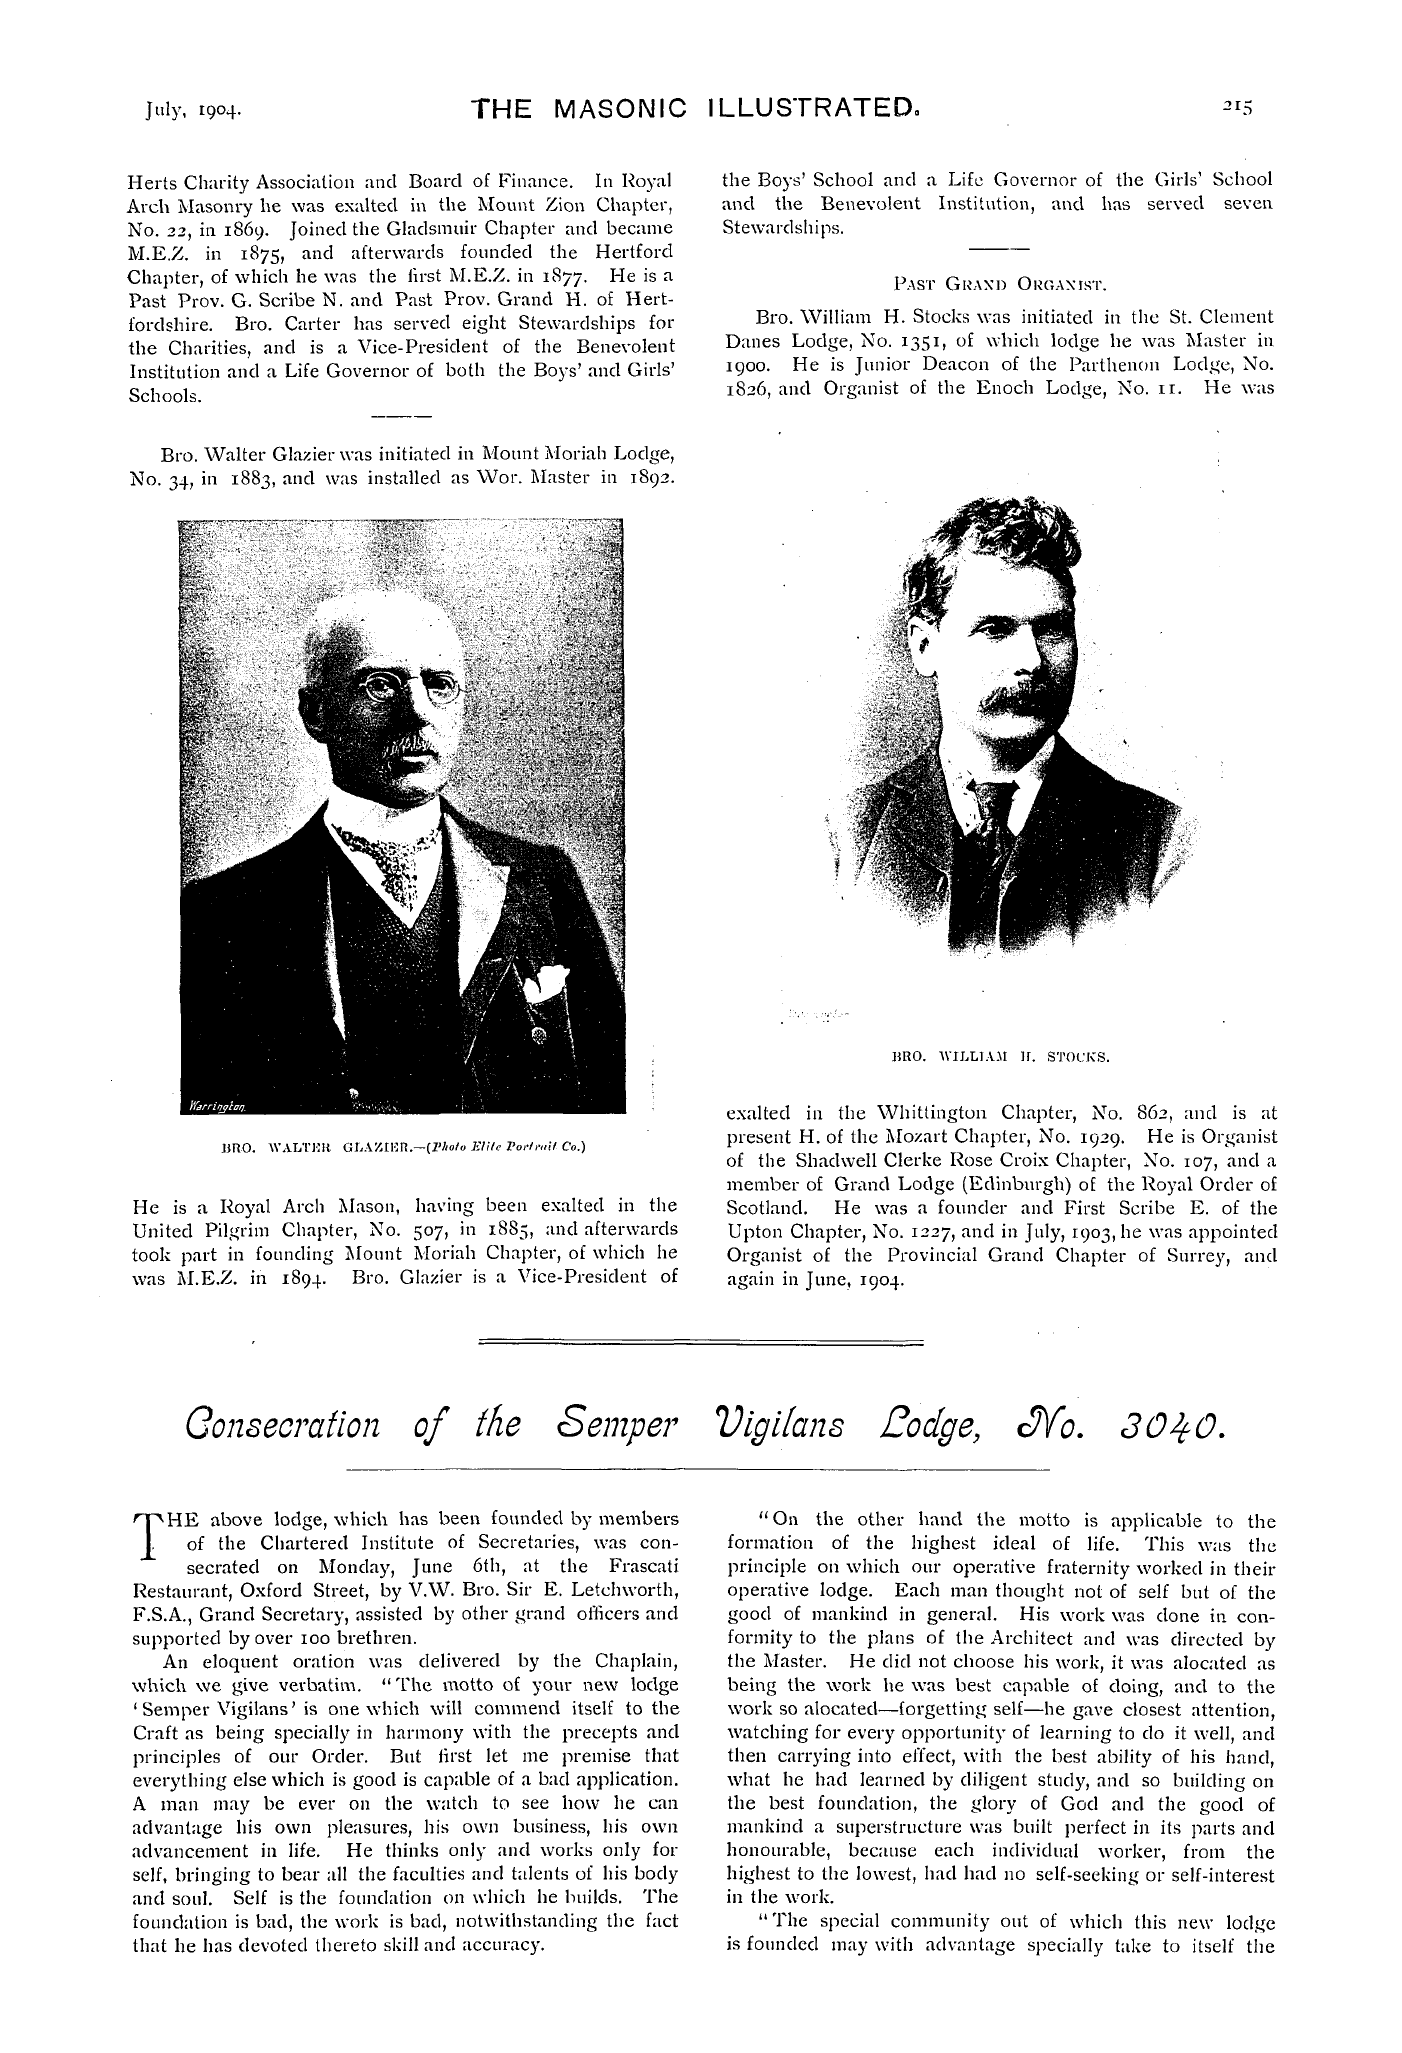 The Masonic Illustrated: 1904-07-01 - Consecration Of The Semper Vigilans Lodge, No. 3040.